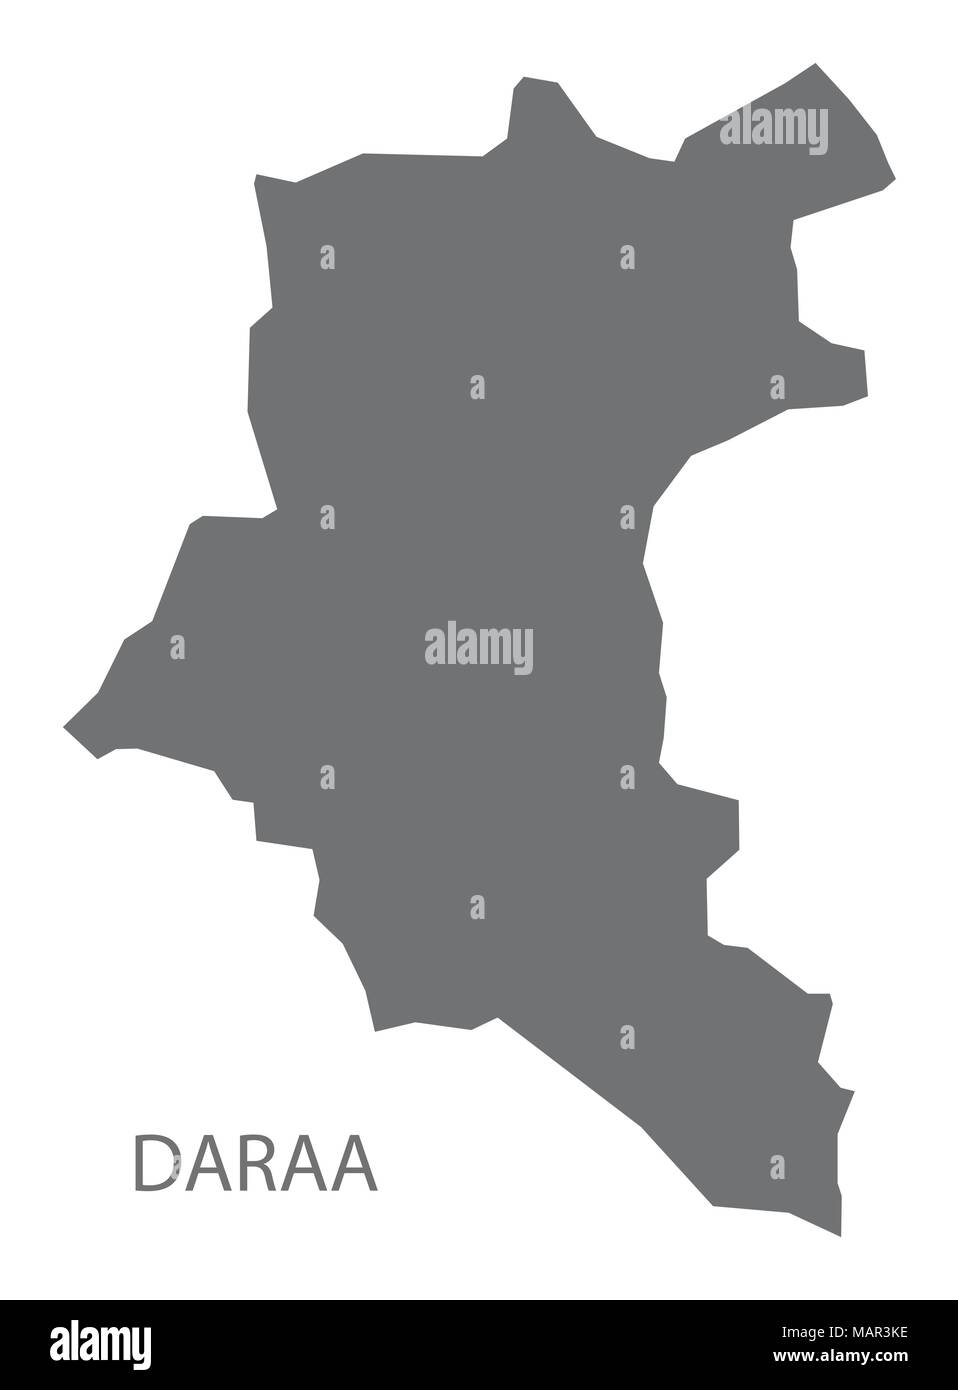 Daraa map of Syria grey illustration shape Stock Vector